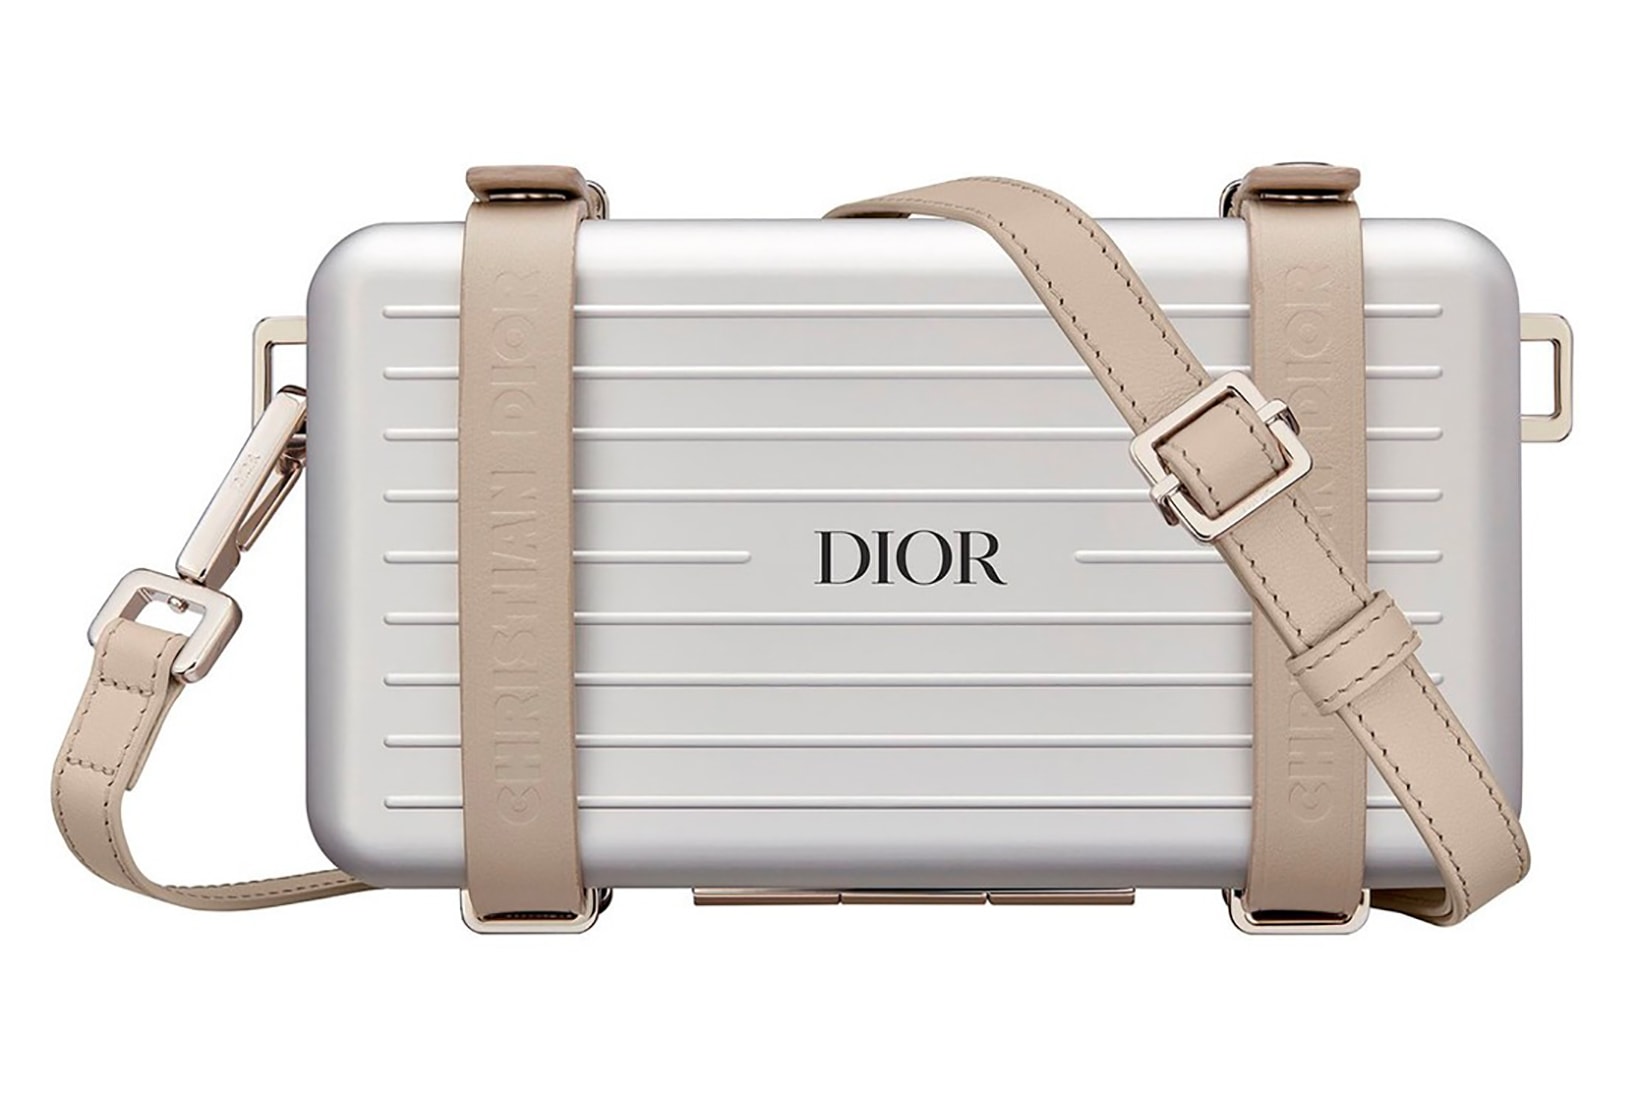 Rimowa x Dior Collaboration Bag Collection